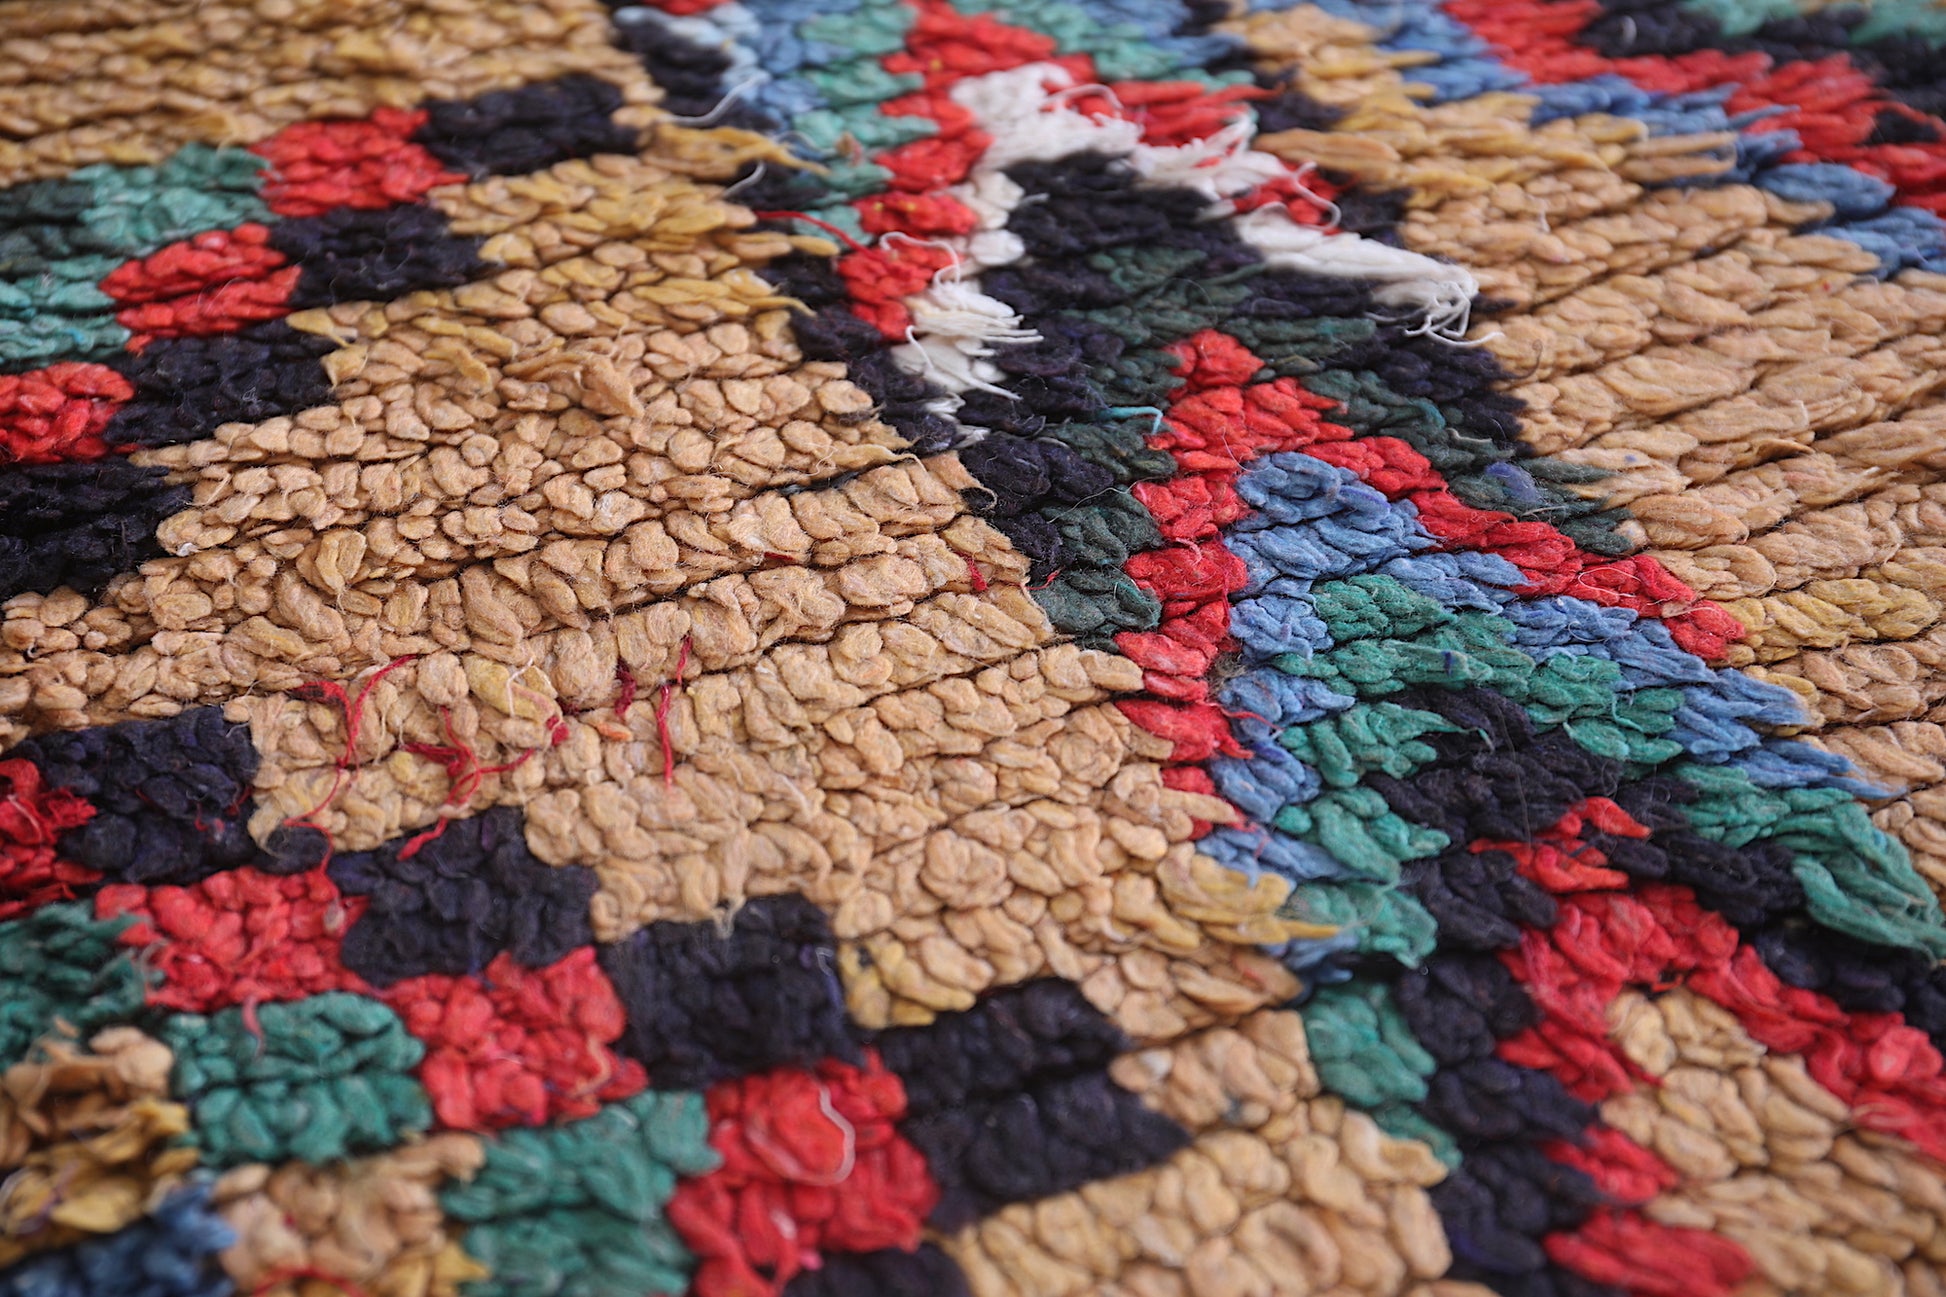 Wonderful Moroccan Runner rug 3 X 7.4 Feet